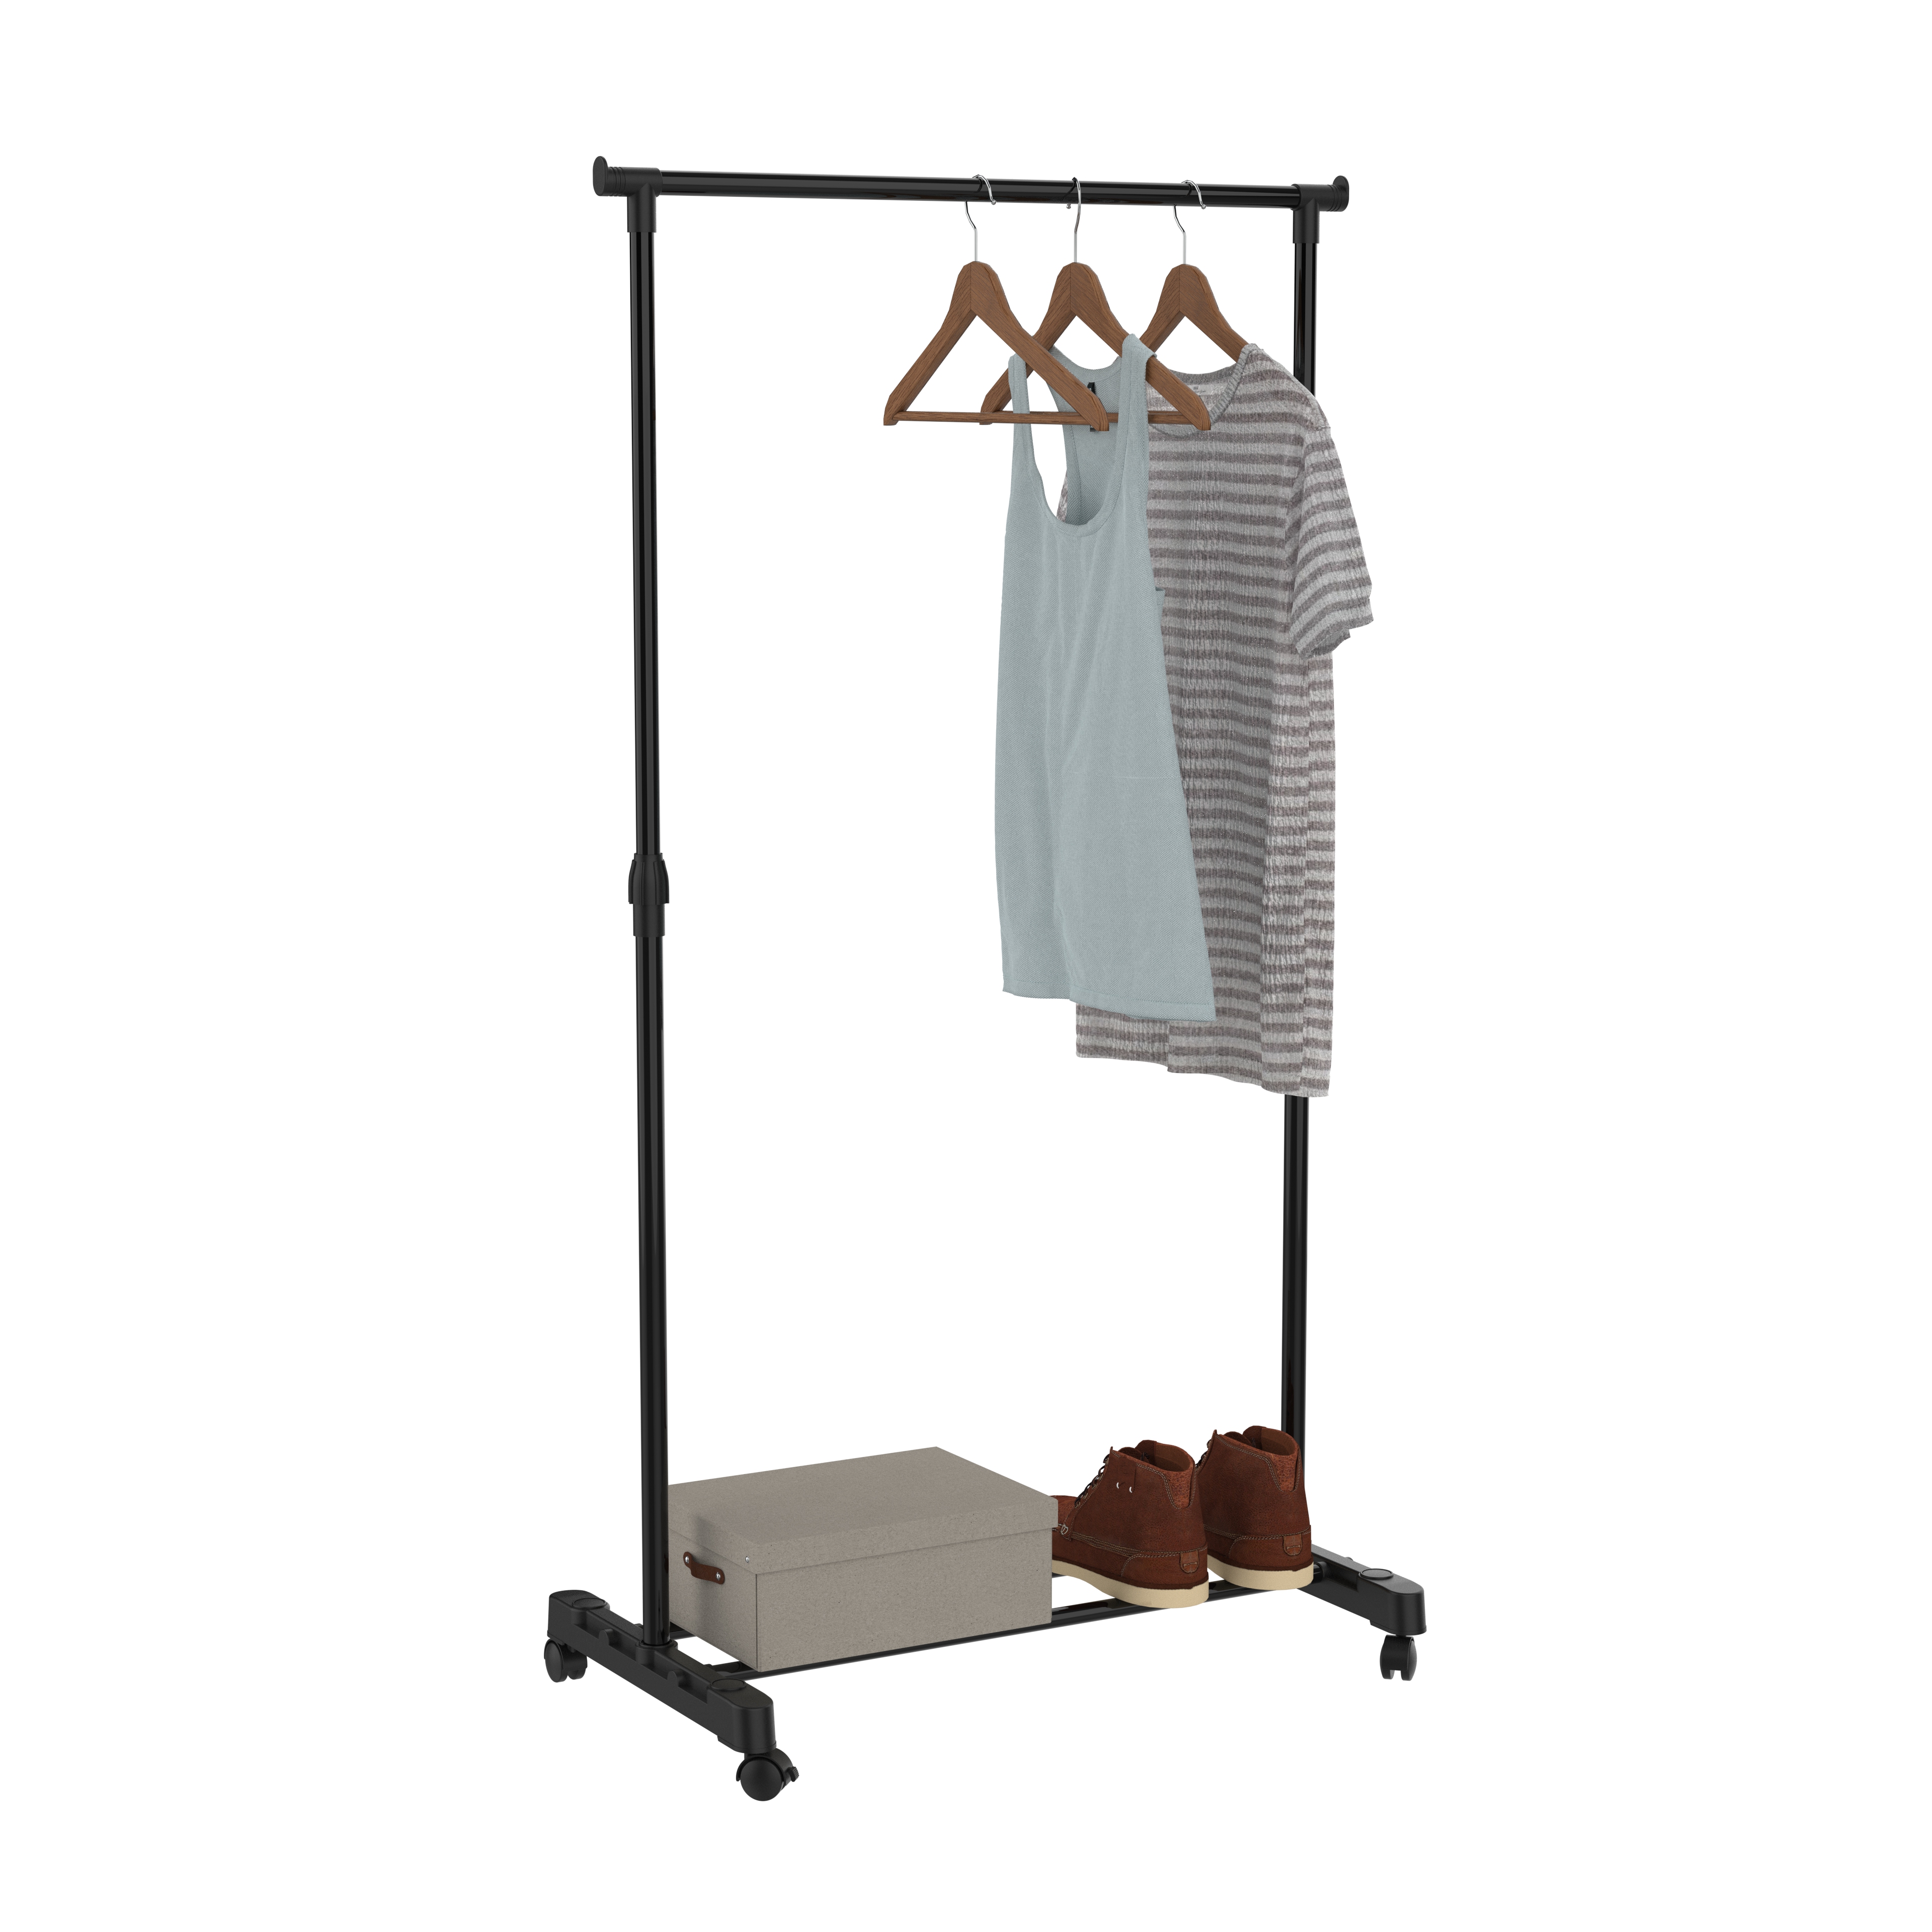 Adjustable Single Rail Garment Rack with Wheels